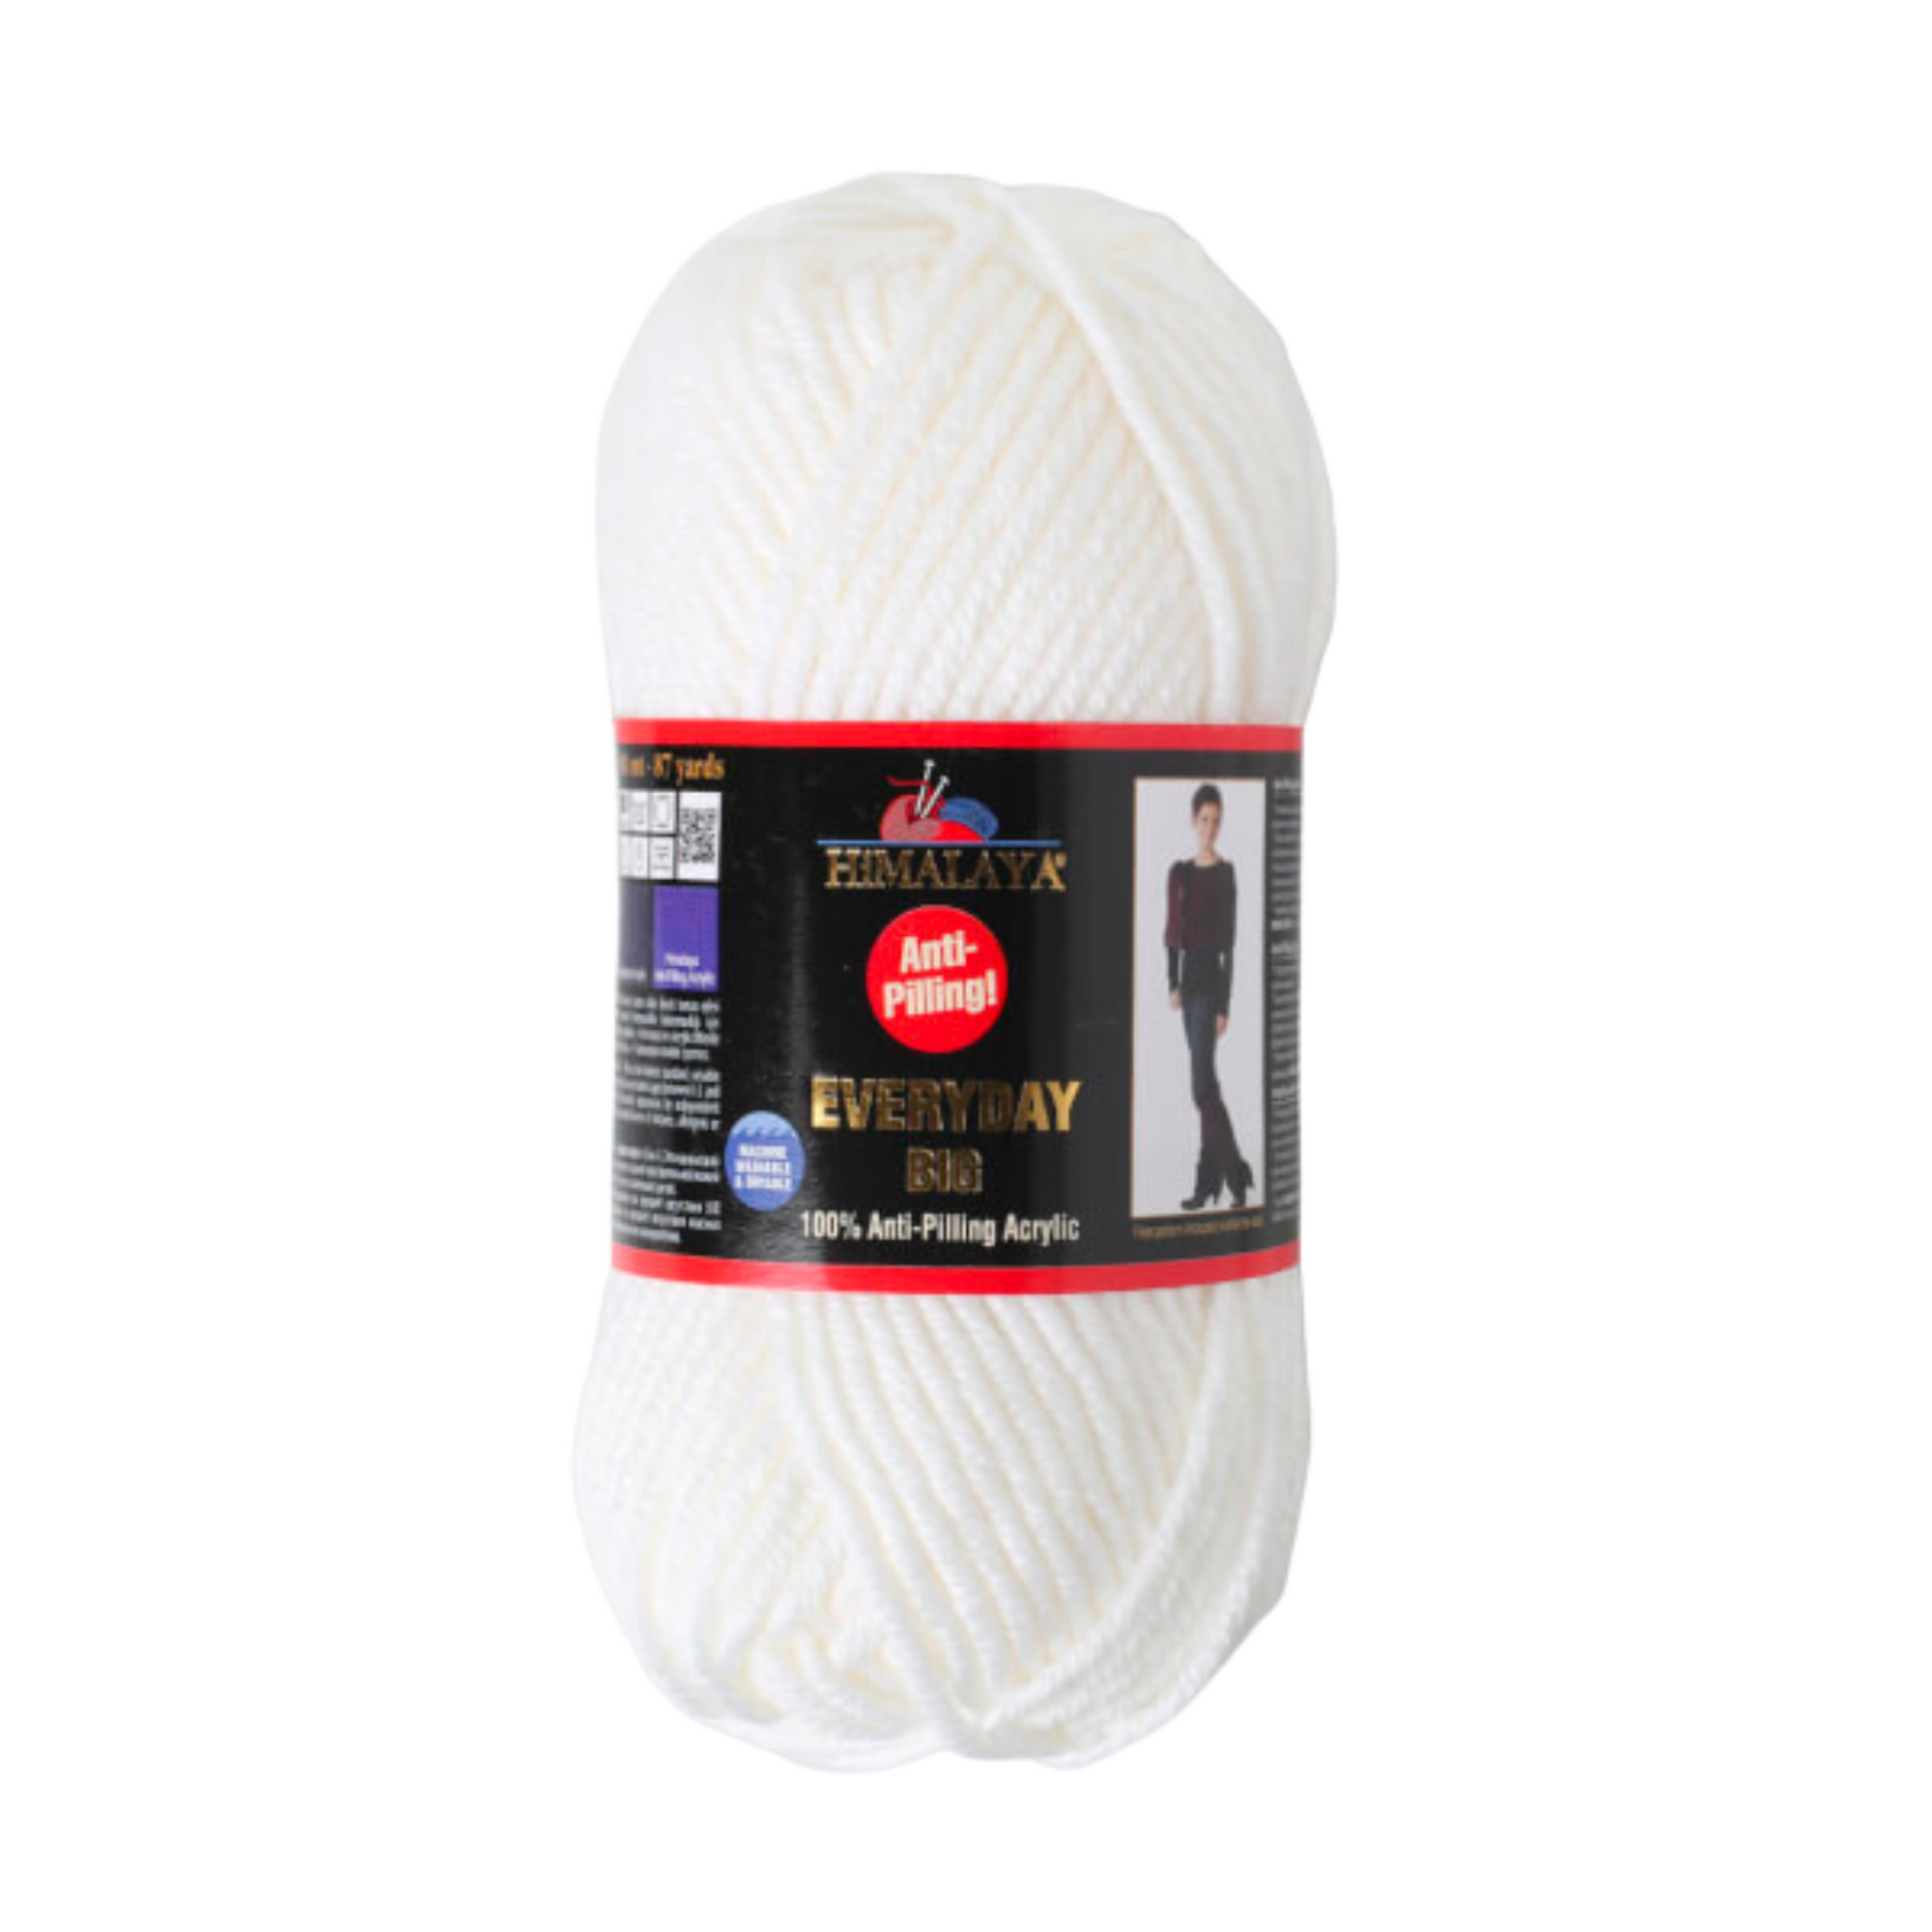 Himalaya Everyday 100% Anti-Pilling Acrylic Yarn, Brown - 70830